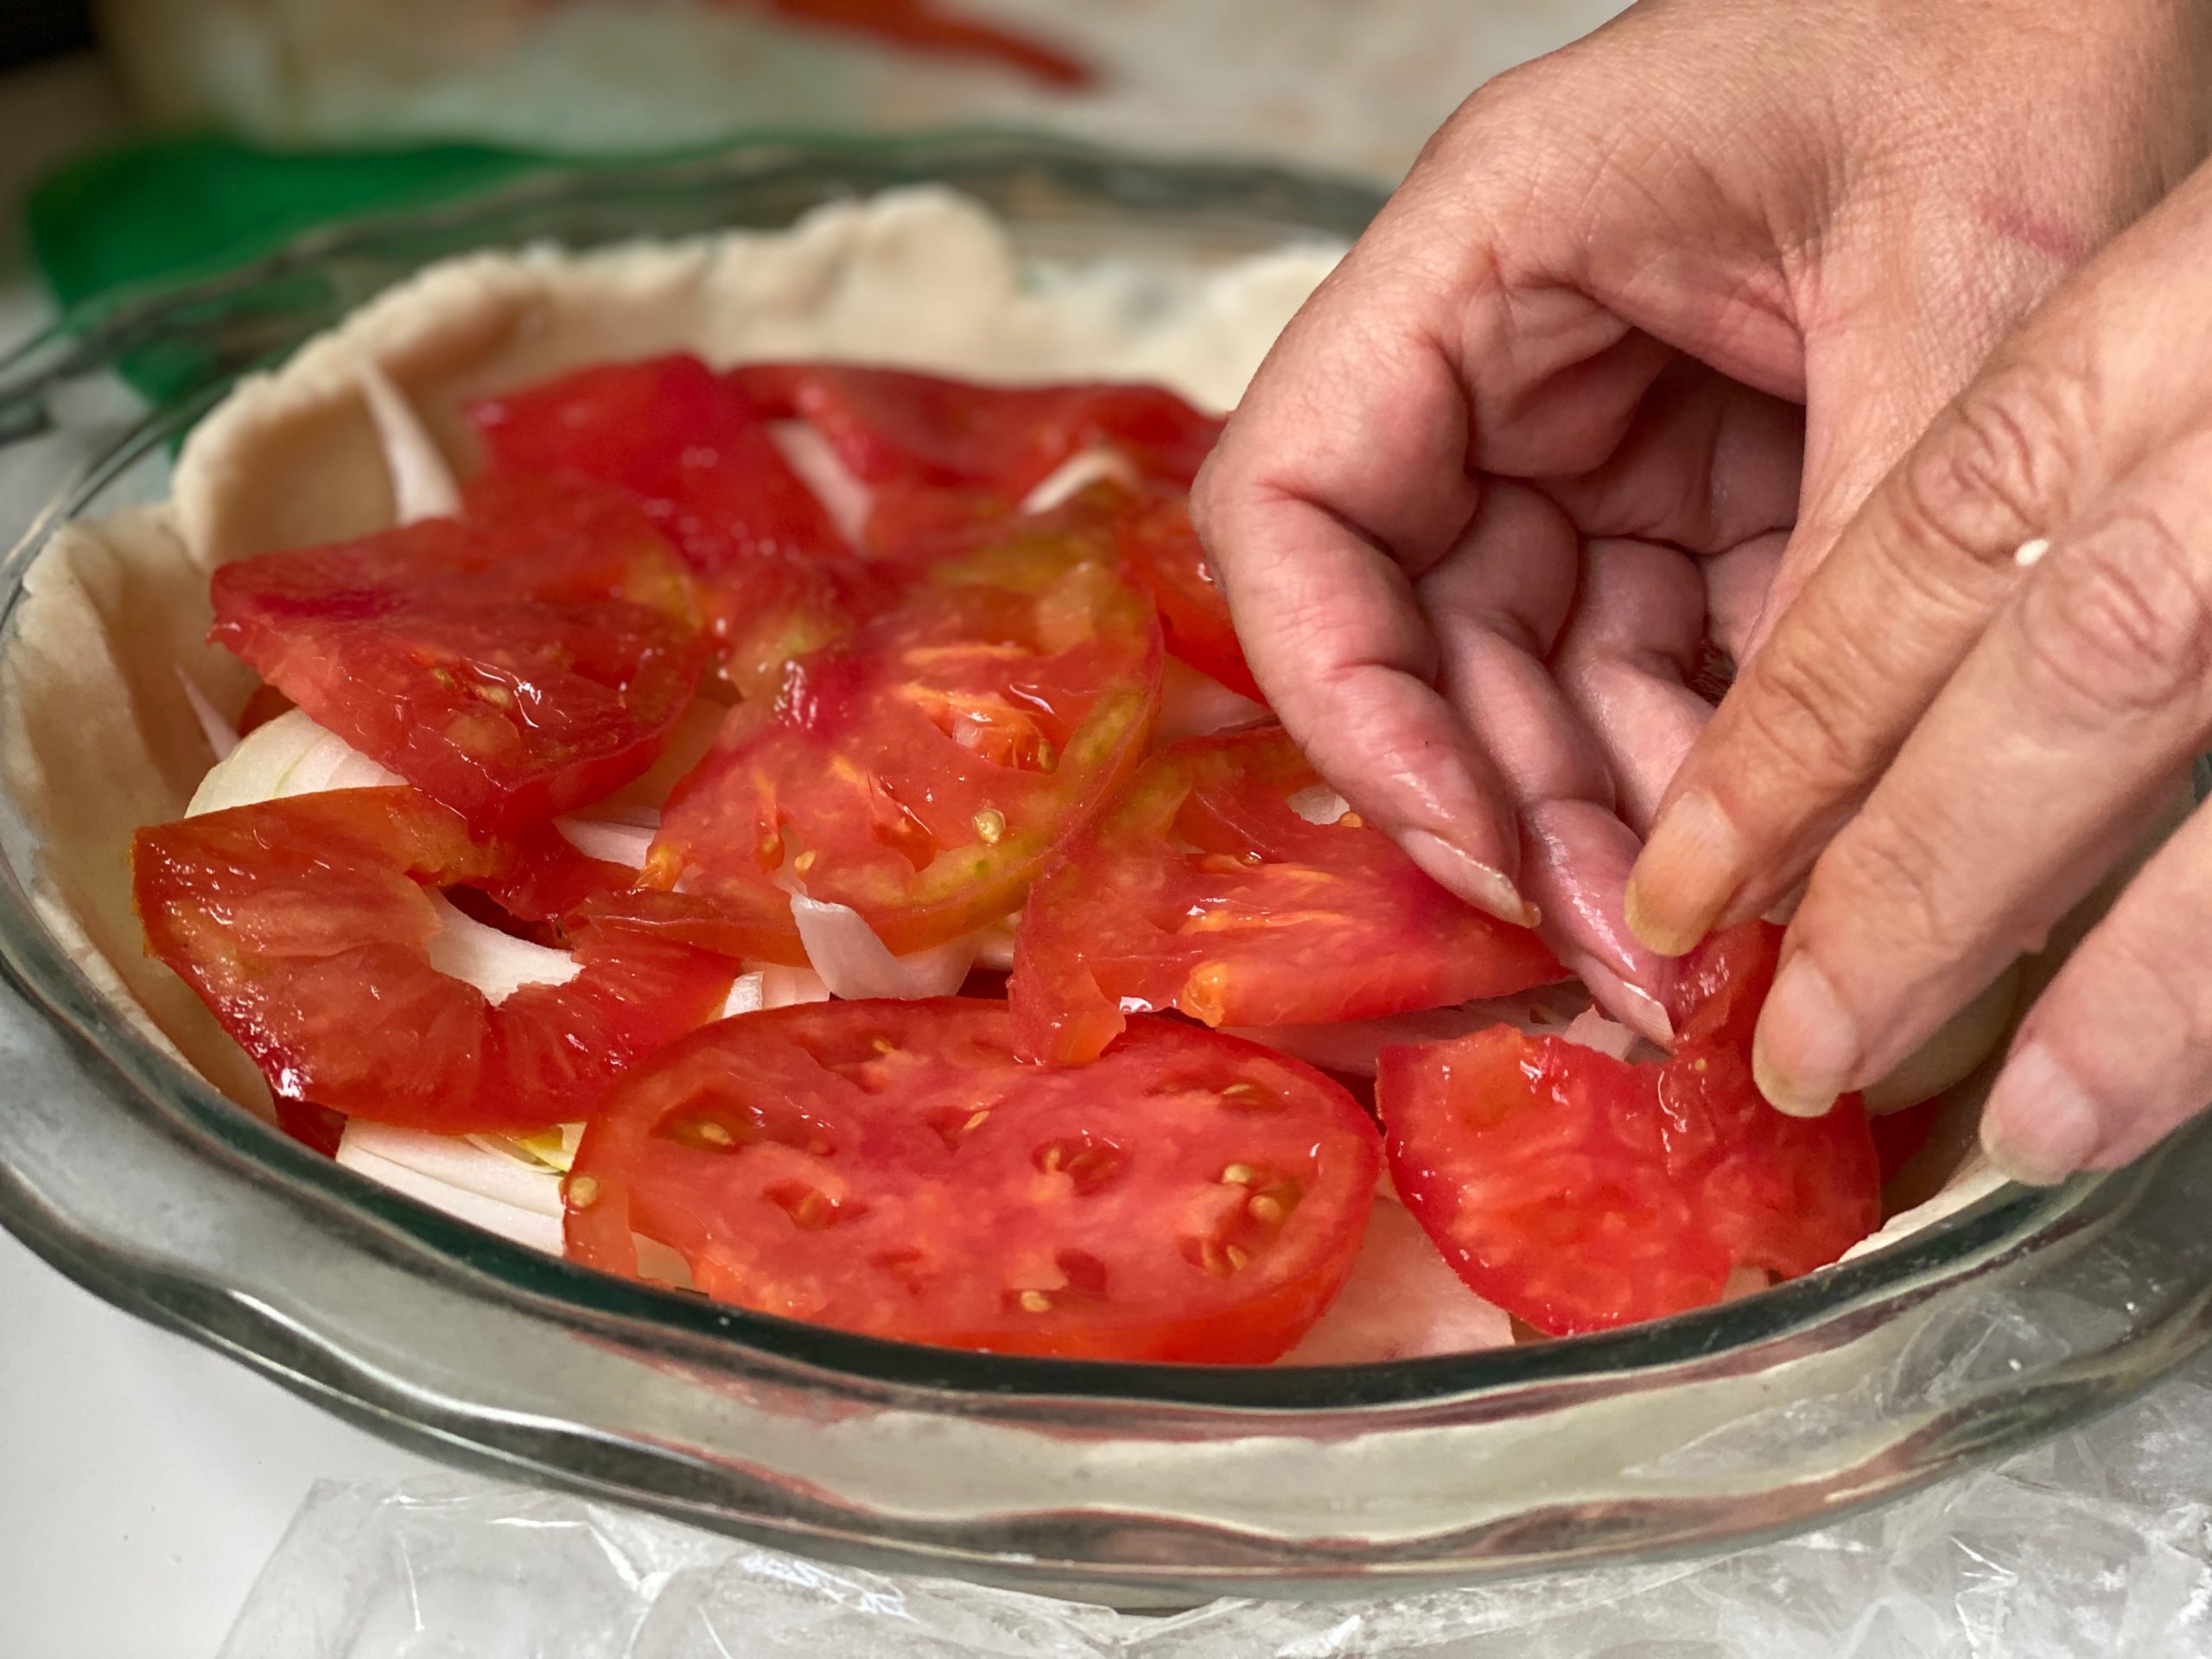 Locally Grown Eats: Tomato and Vidalia Onion Pie